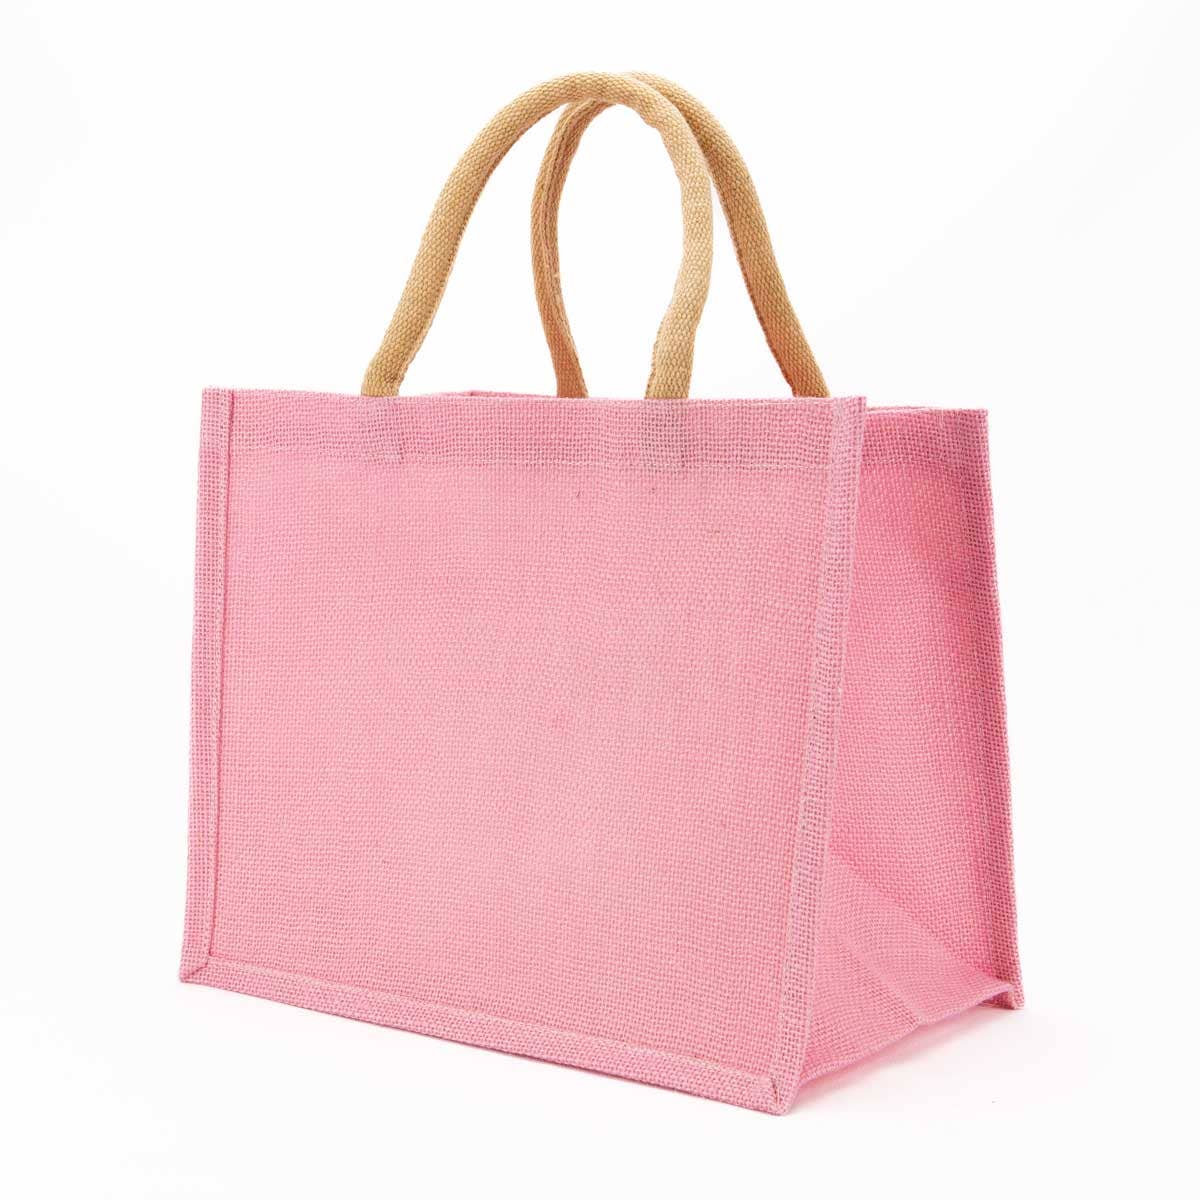 Tote Bag - Light Pink